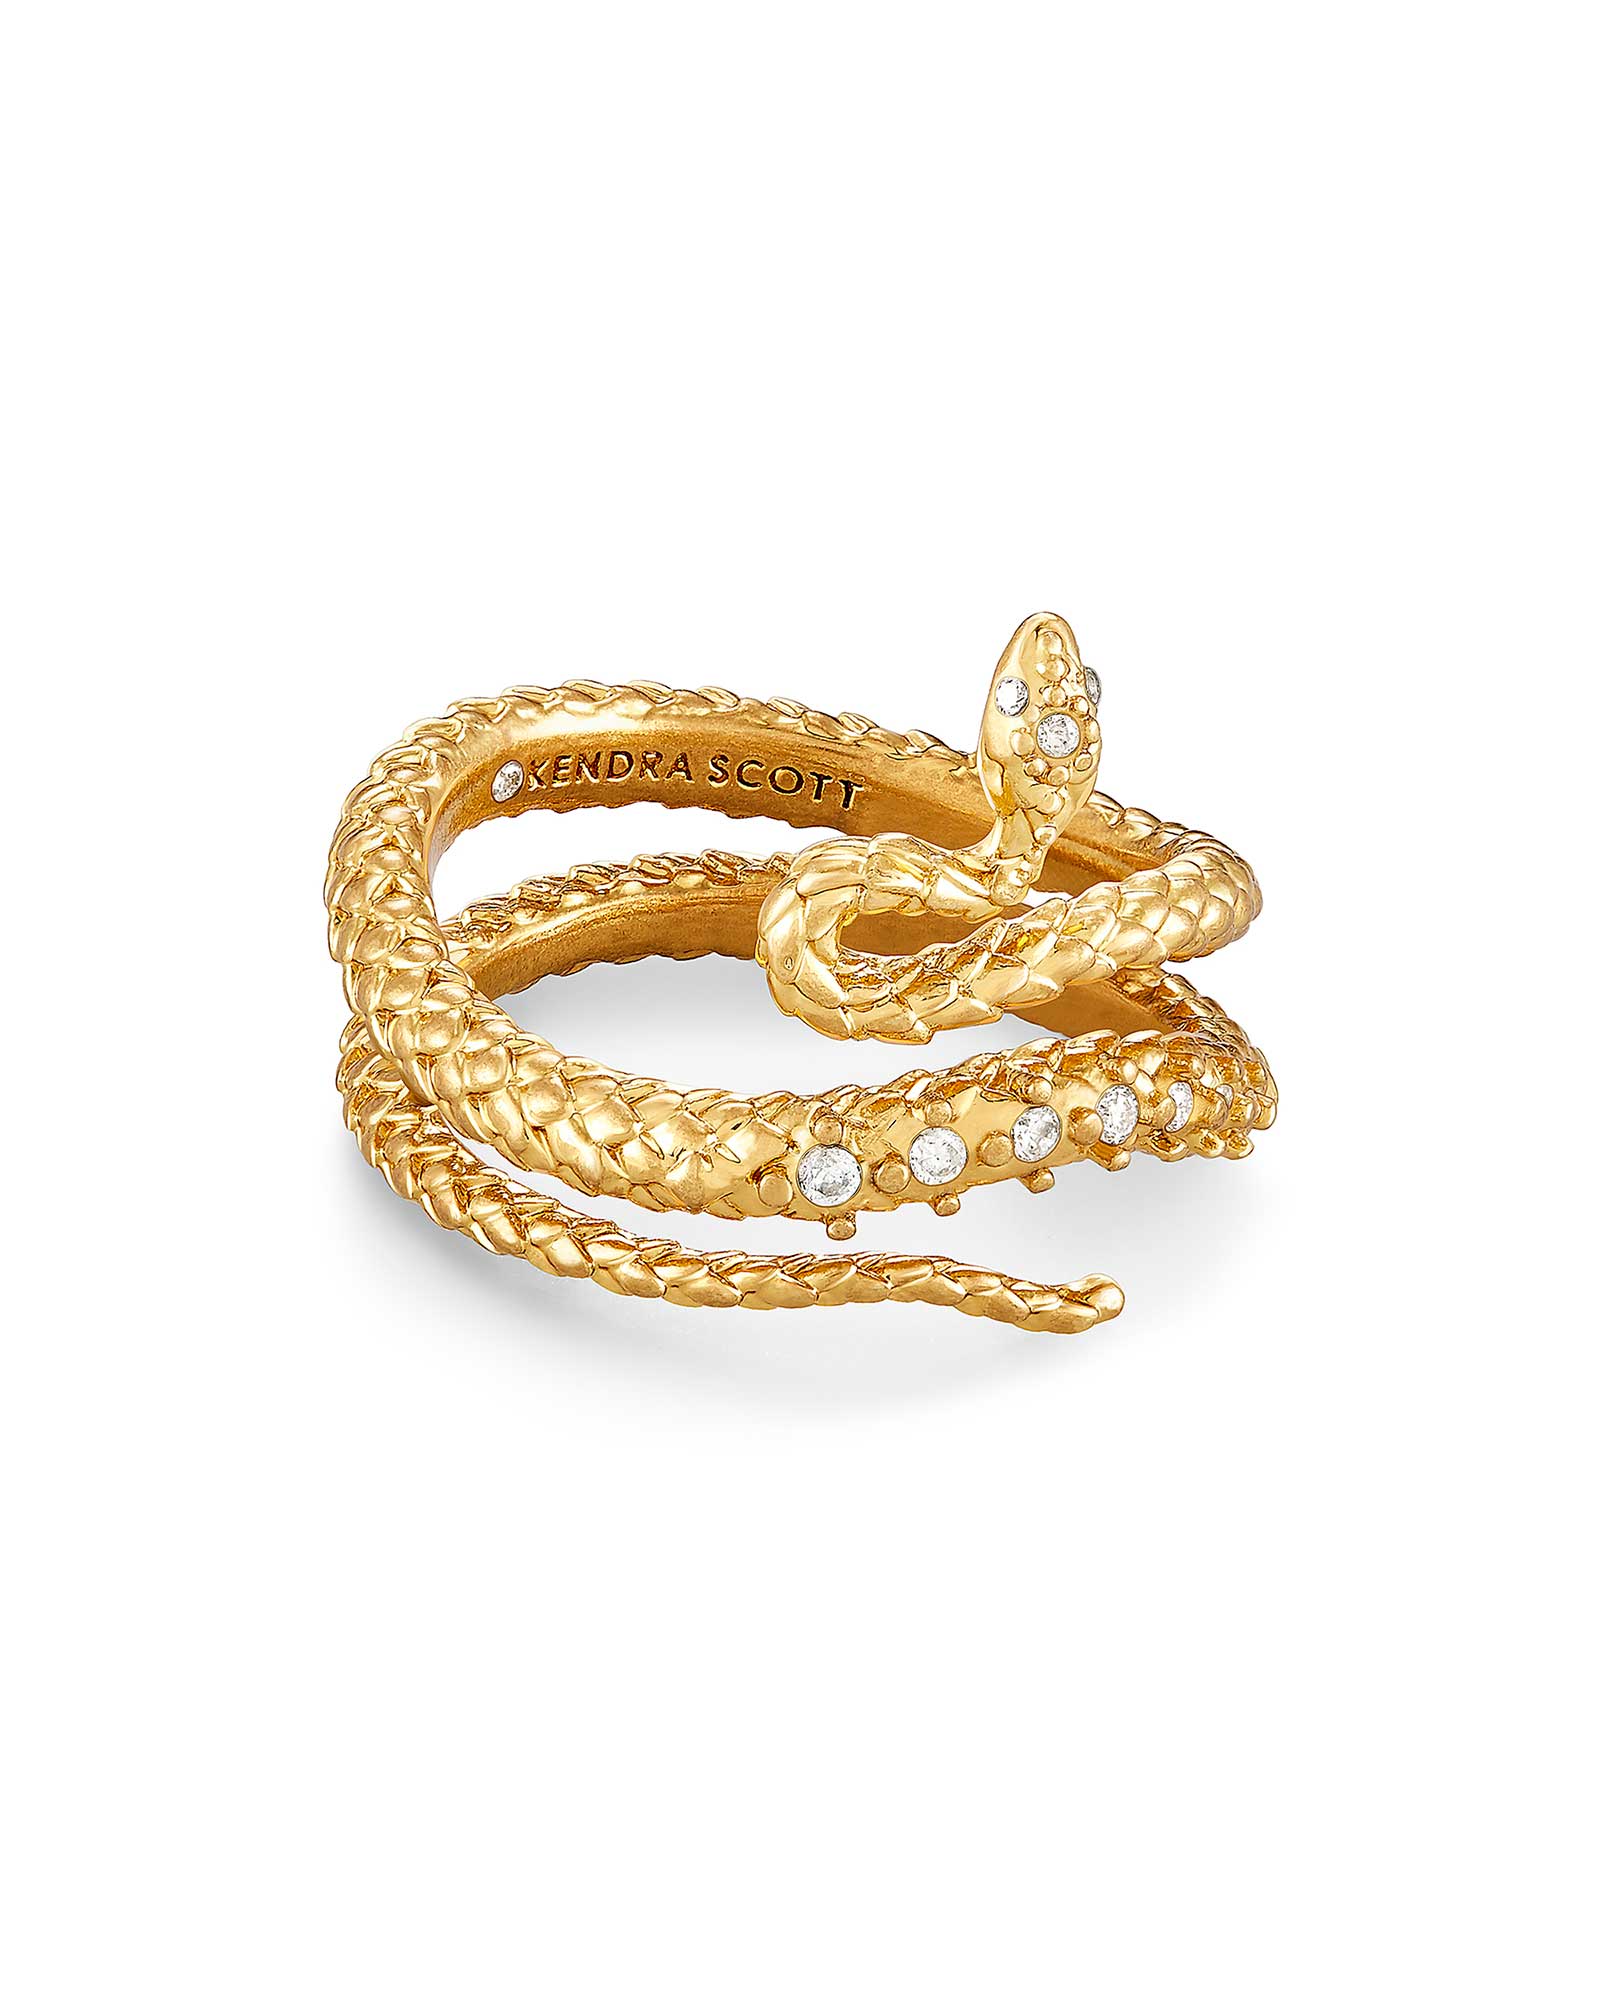 E&e North Star Statement Ring in Metallic Womens Jewellery Rings 